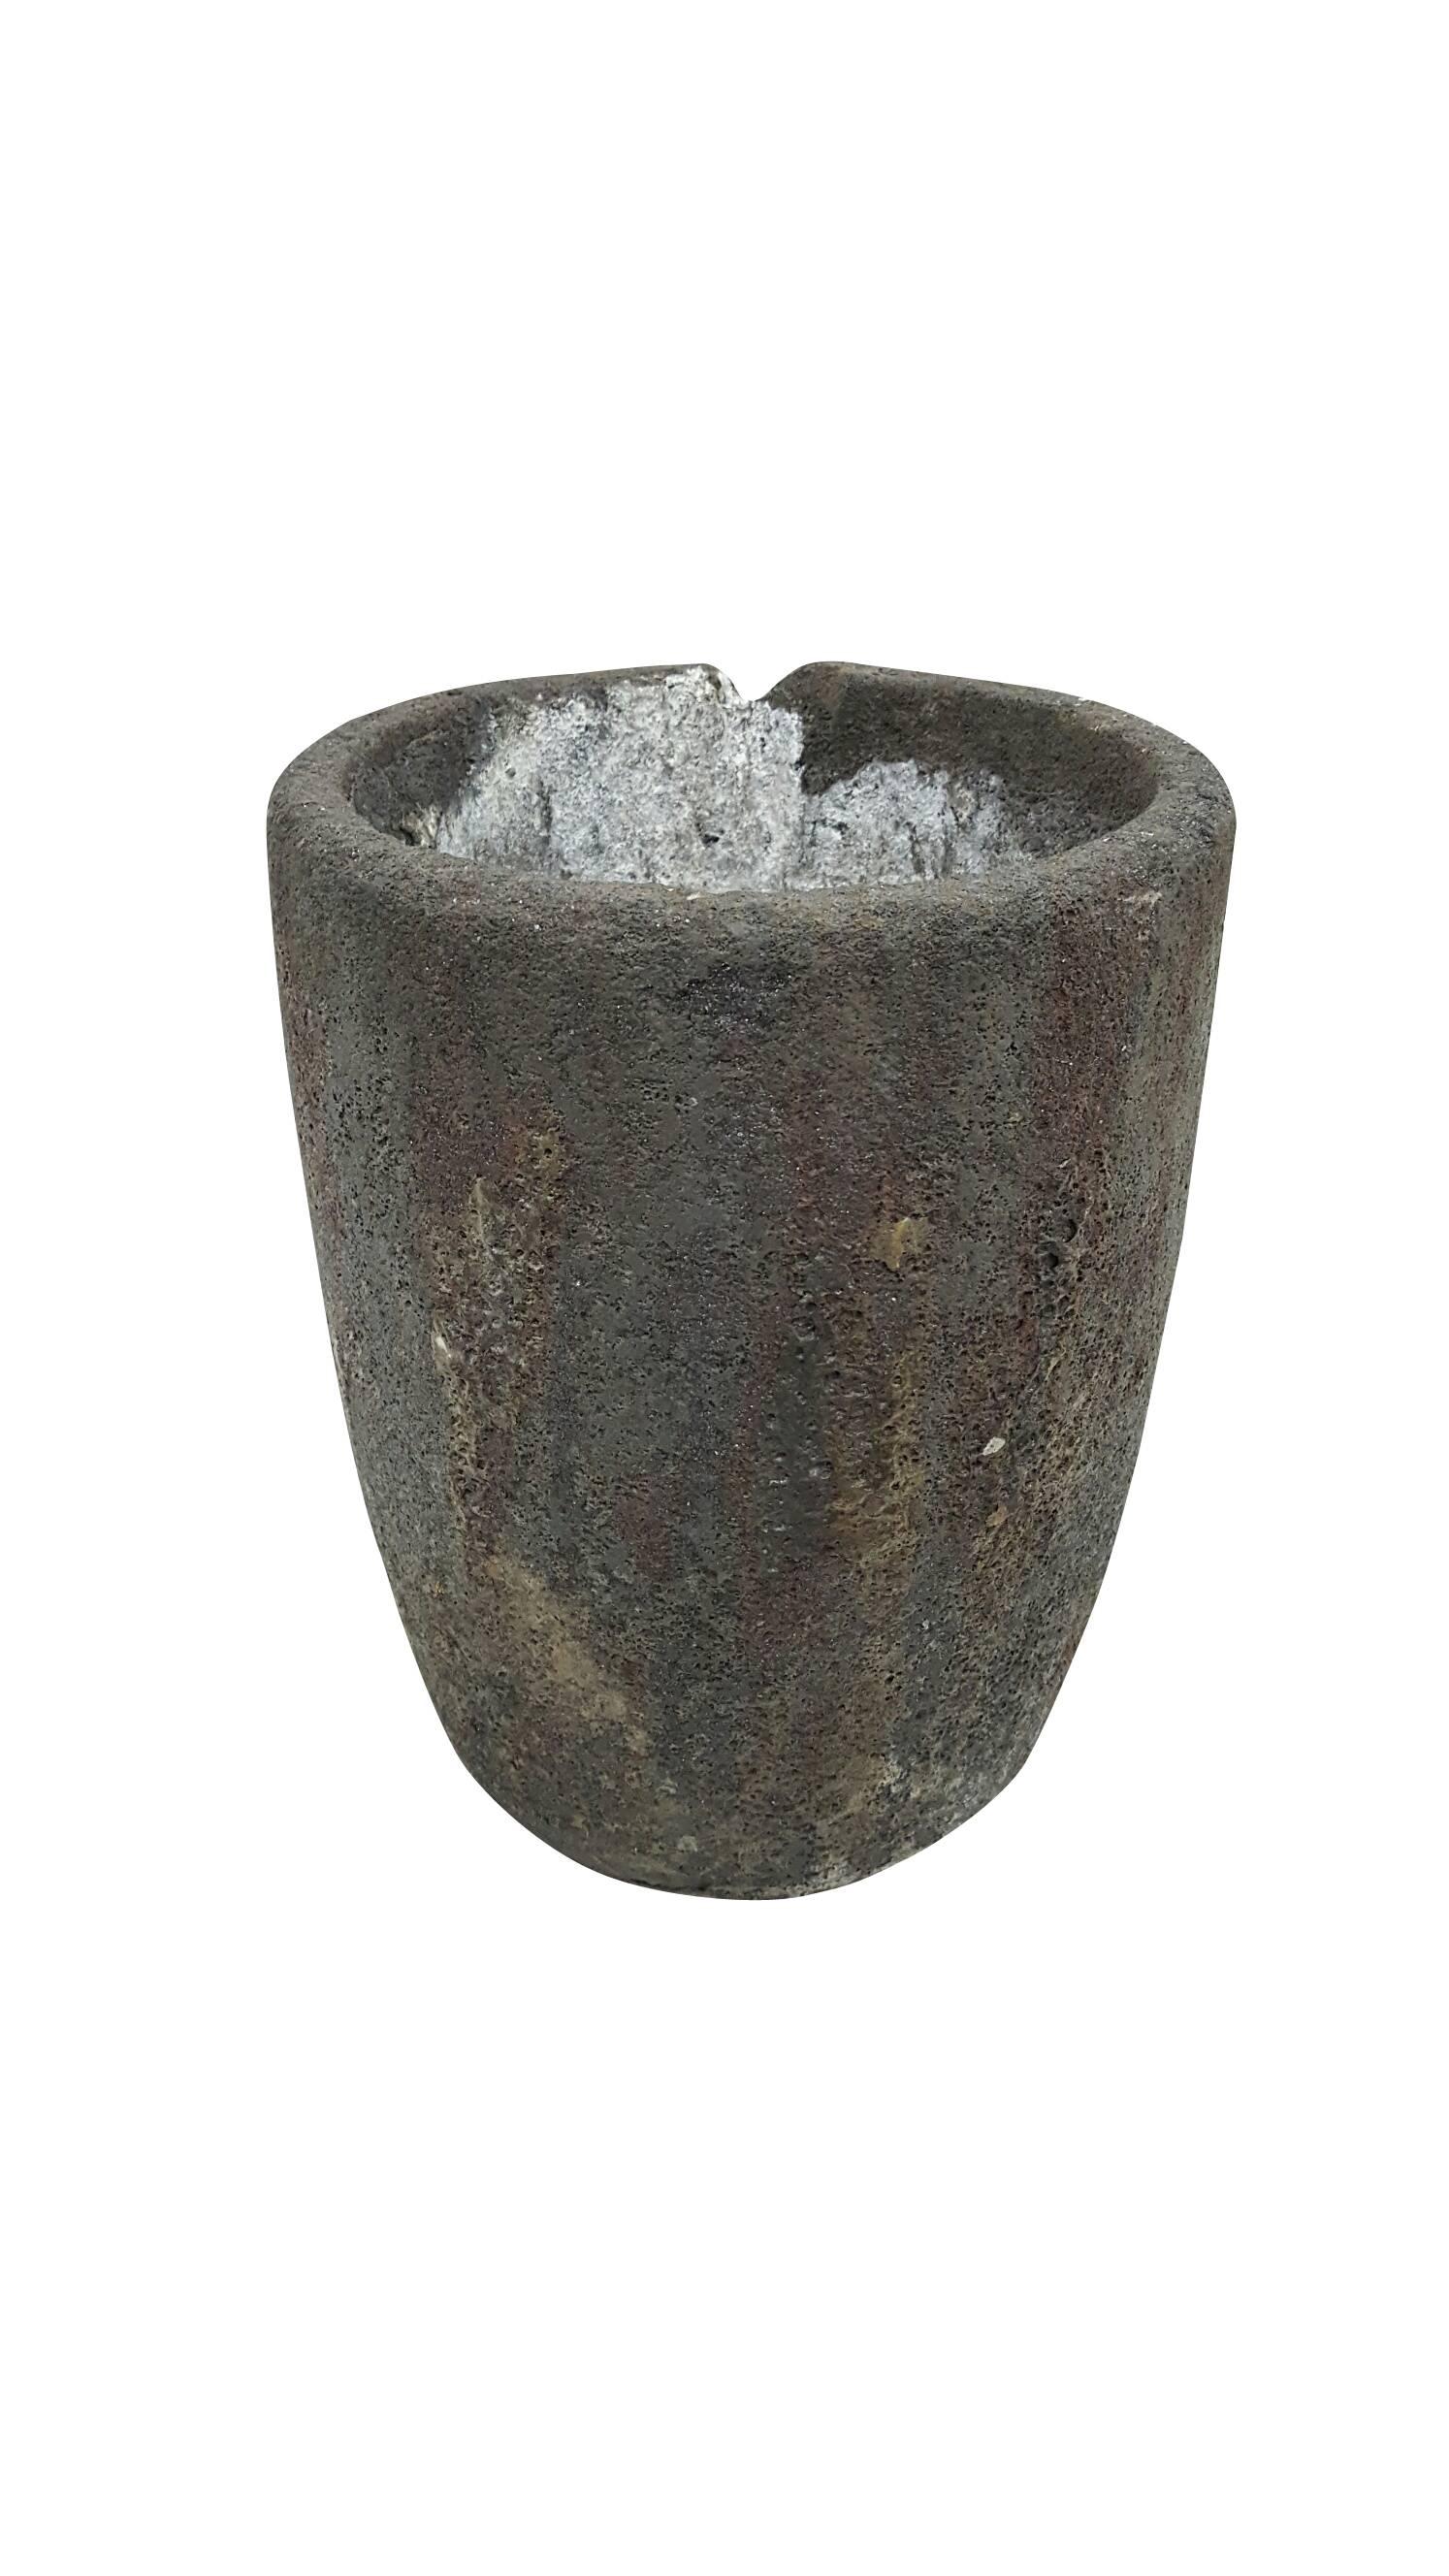 Beautiful antique gray stone vase
Dimensions: 9.75" diameter x 13" height.